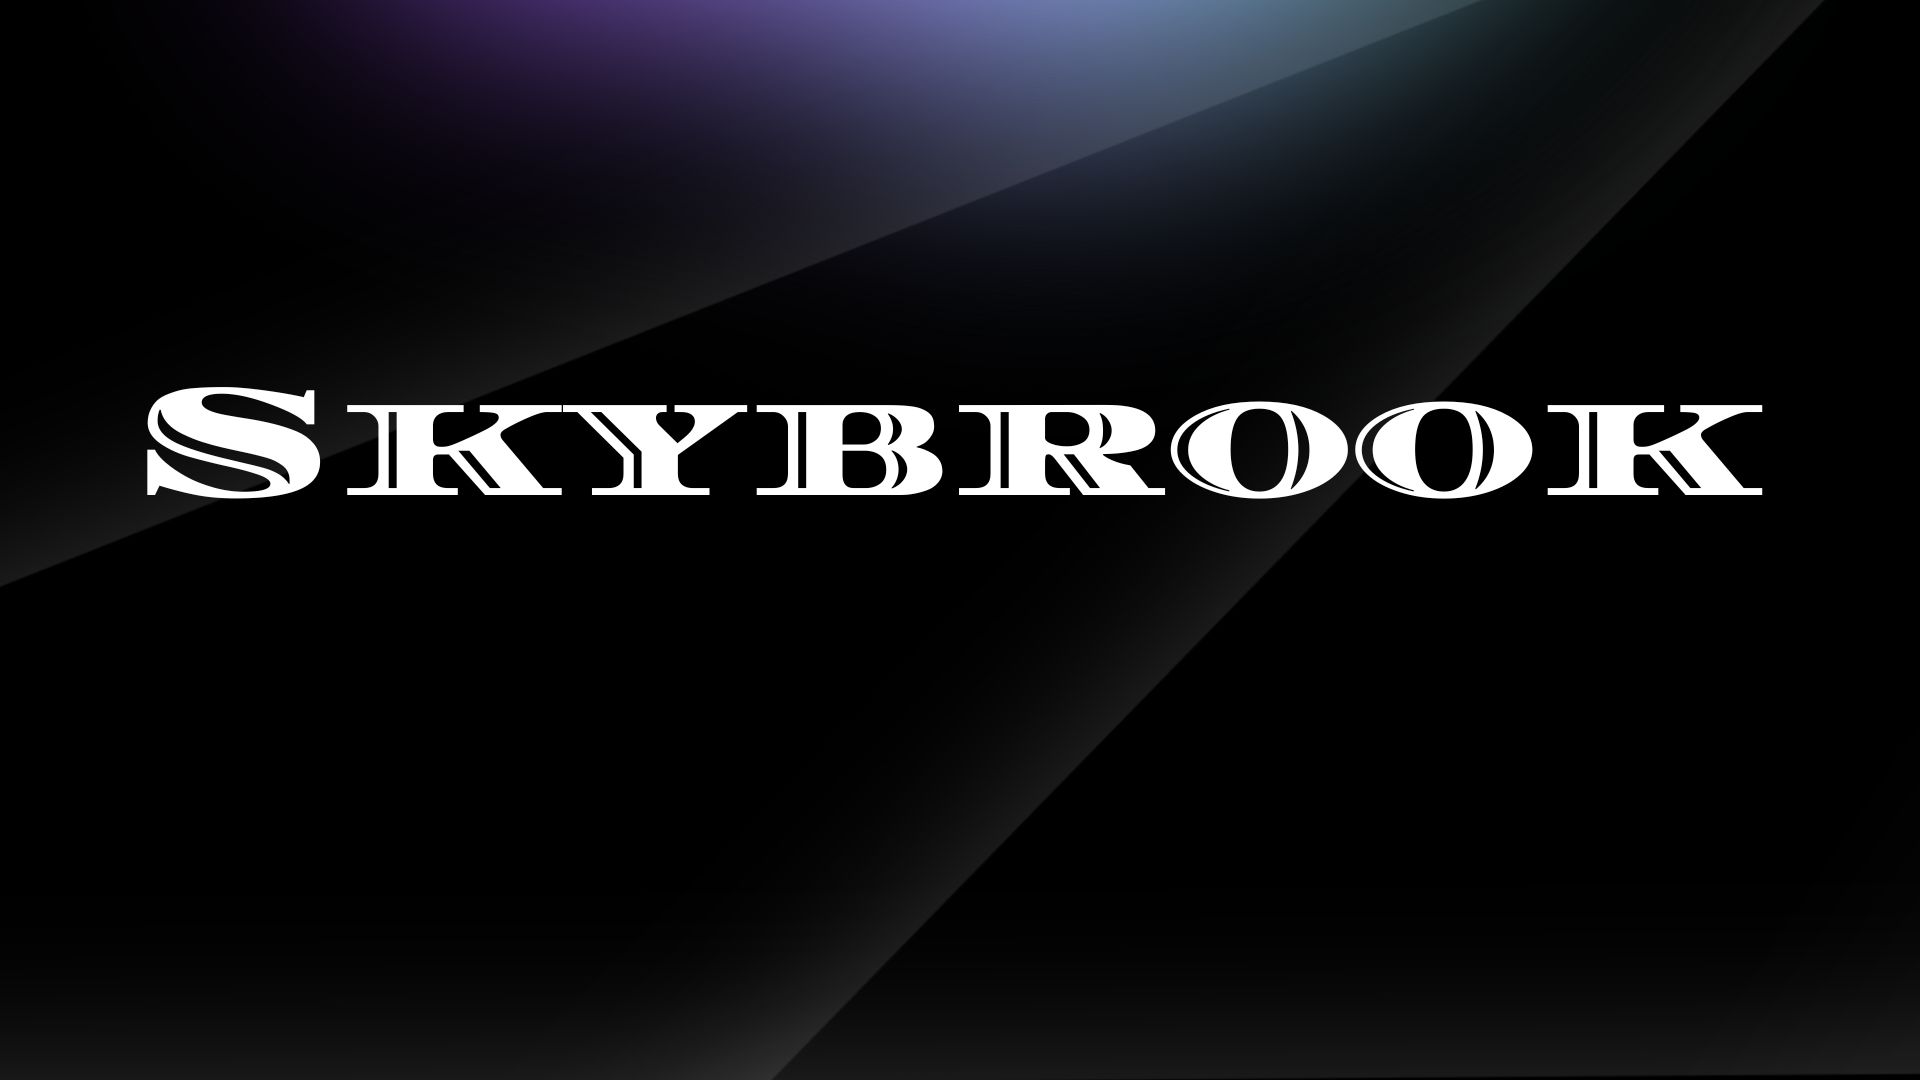 Skybrook #495/1000